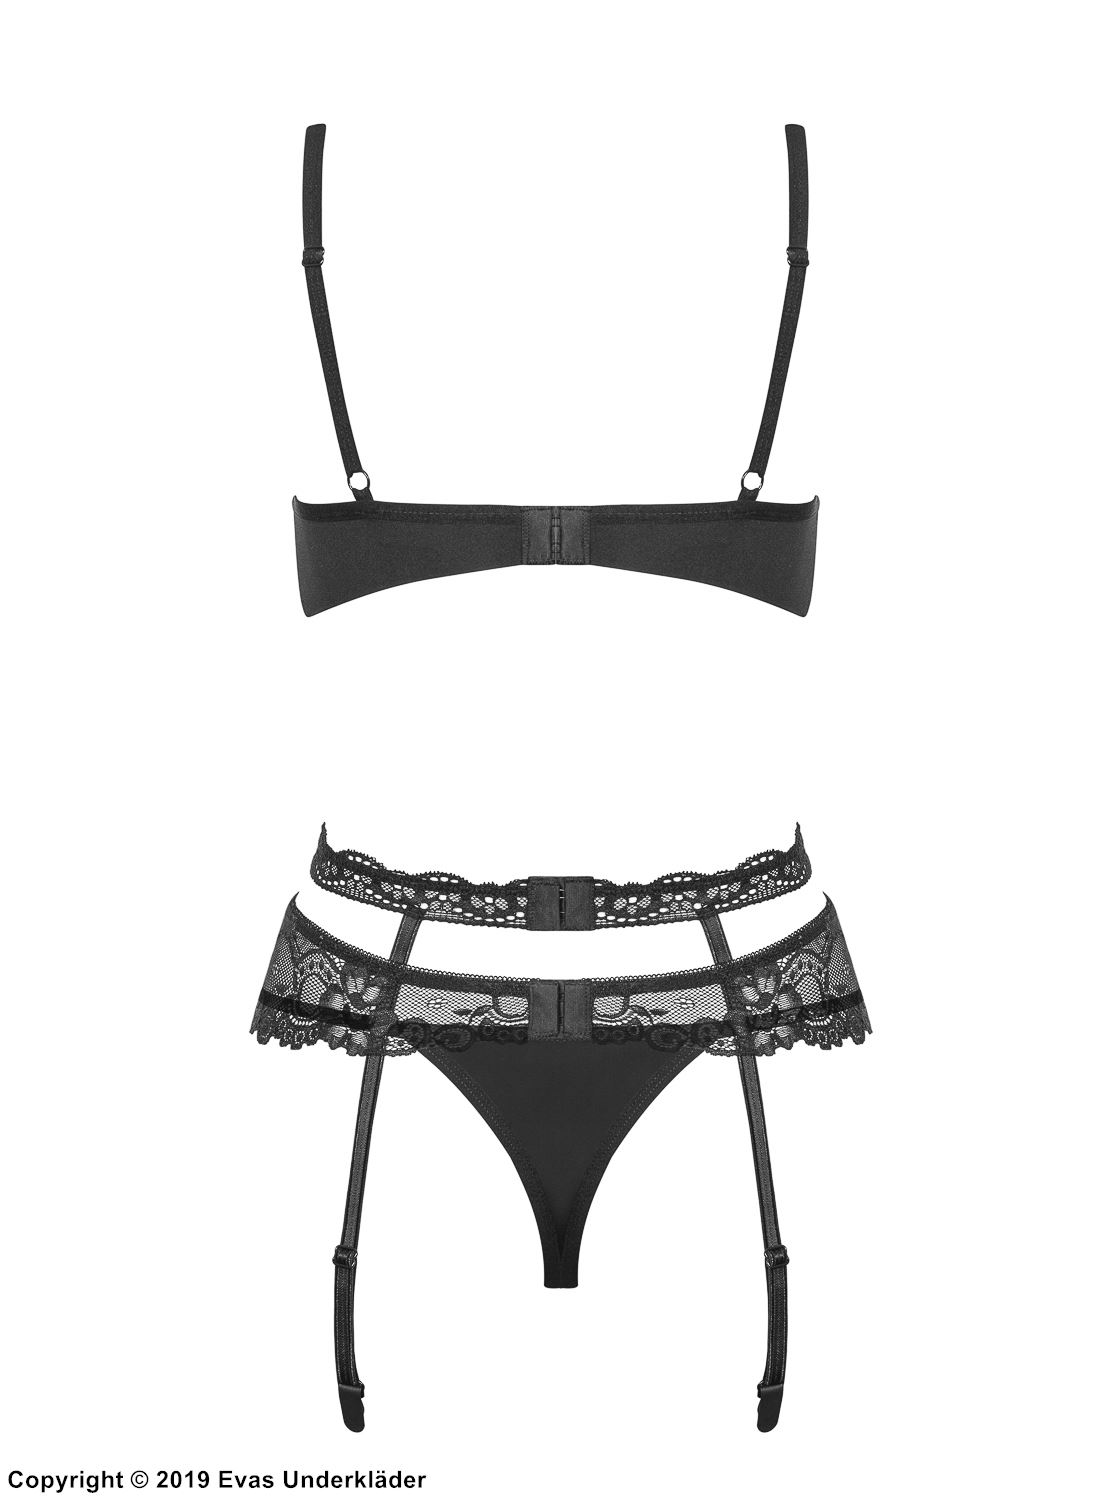 Seductive lingerie set, lace cups, rhinestone heart, garter belt